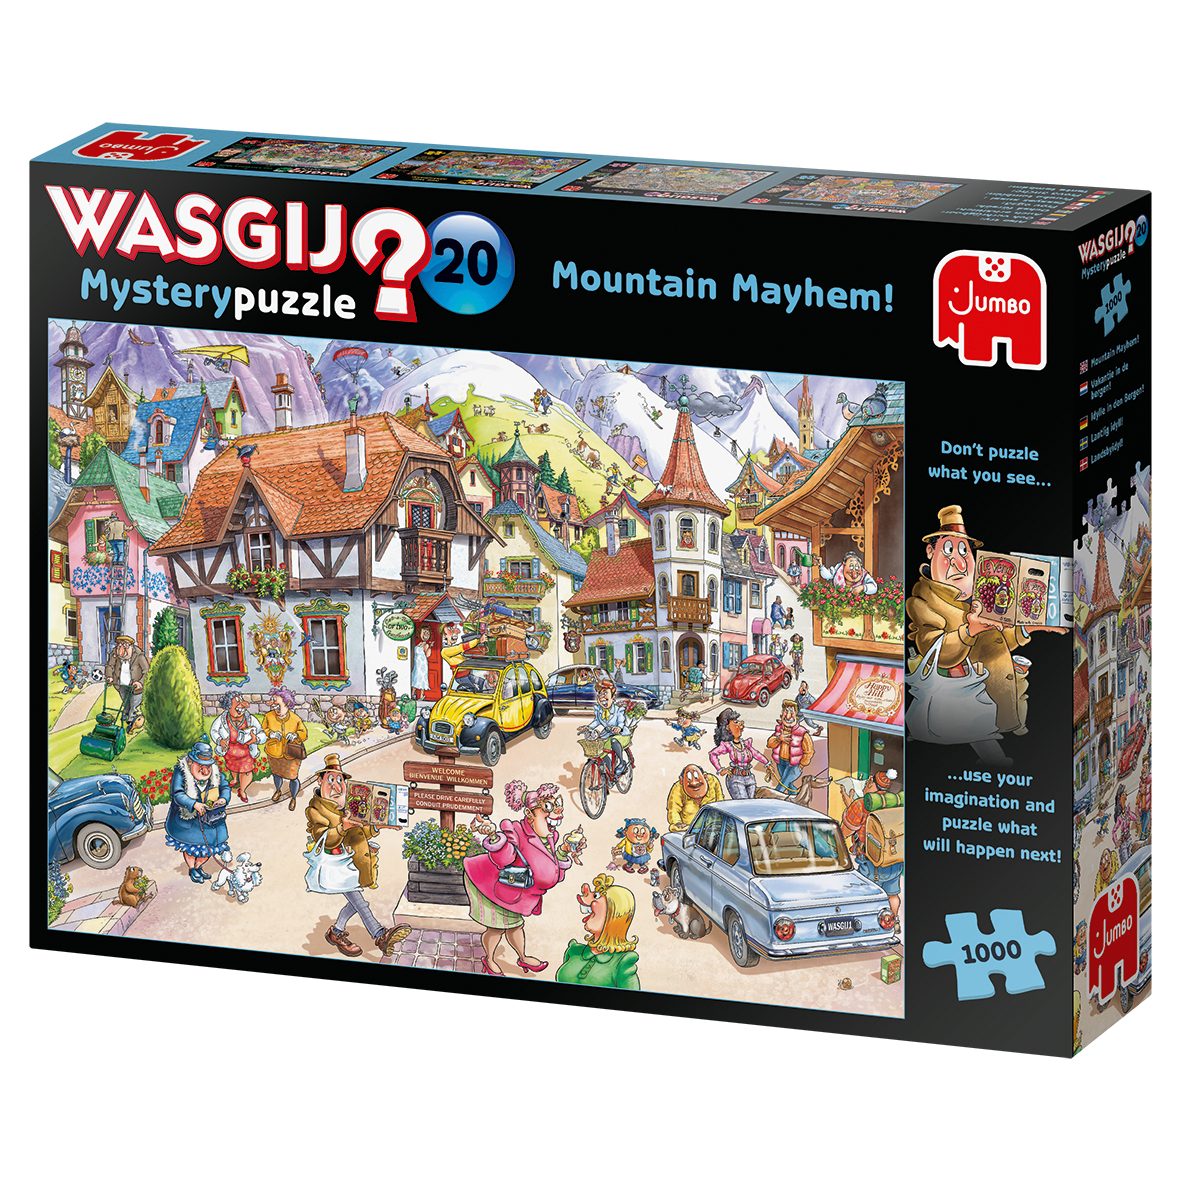 Spiele Mystery Idylle 25002 Bergen!, - 20 1000 Wasgij in den Puzzle Puzzleteile Jumbo